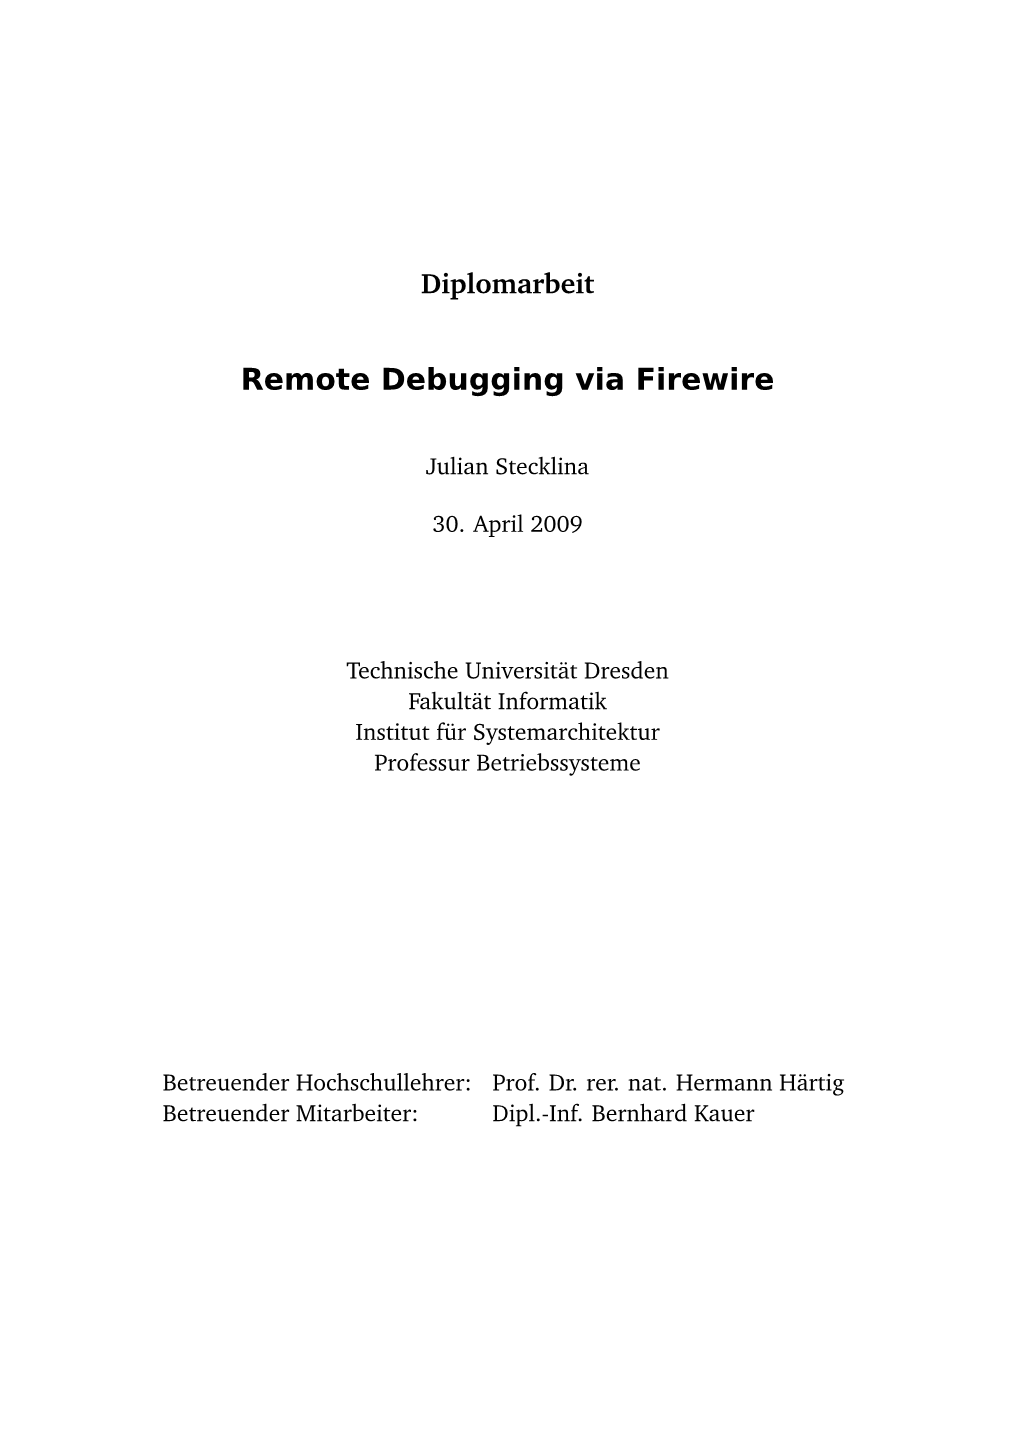 Remote Debugging Via Firewire (PDF)